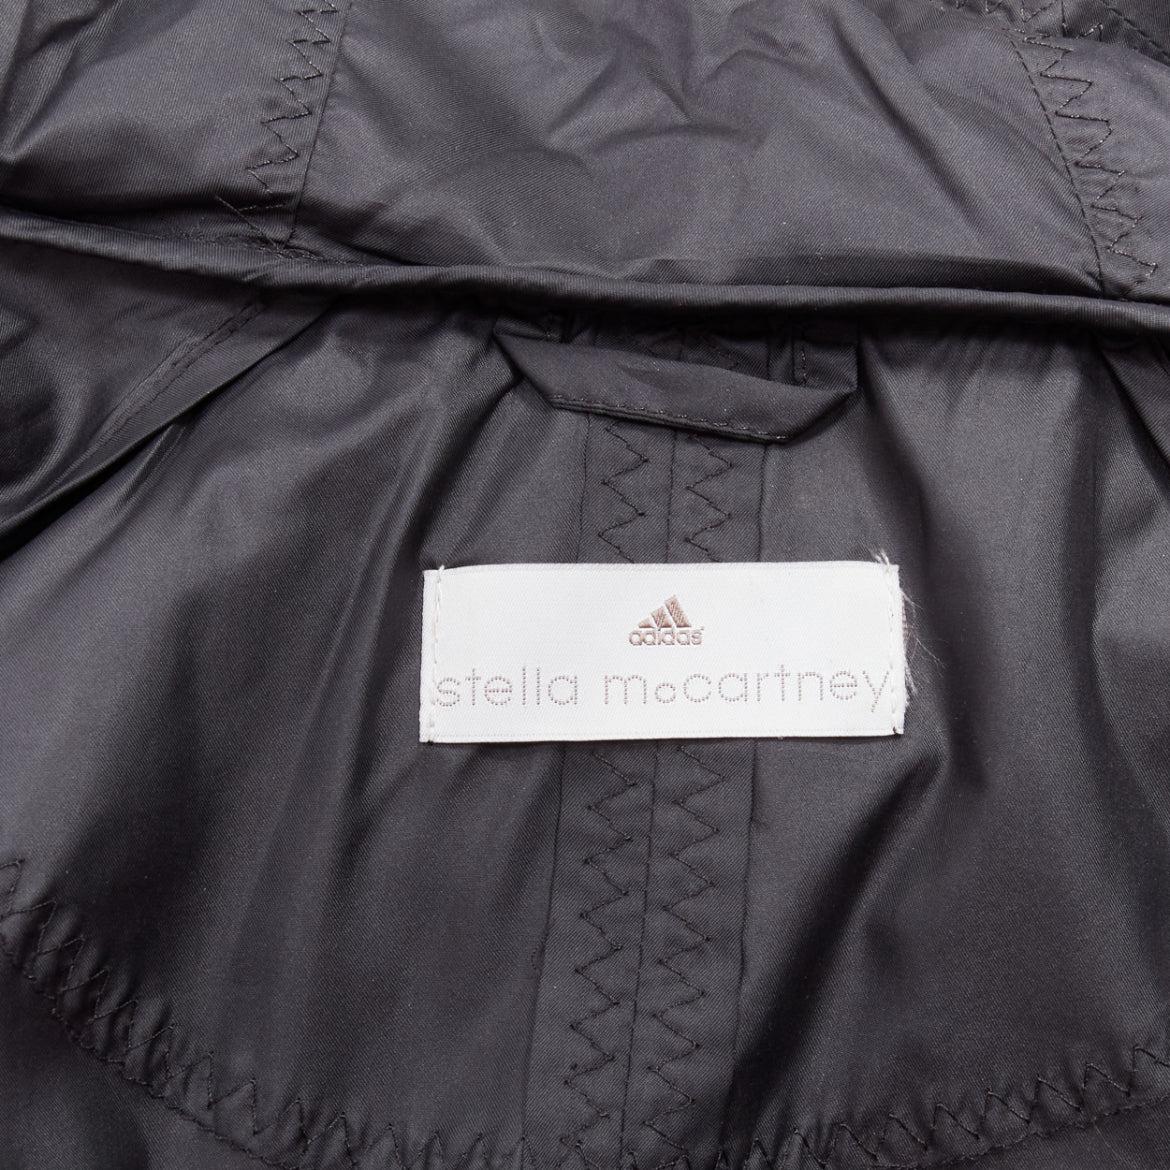 STELLA MCCARTNEY ADIDAS pleated ruffle light nylon windbreaker anorak jacket S For Sale 6